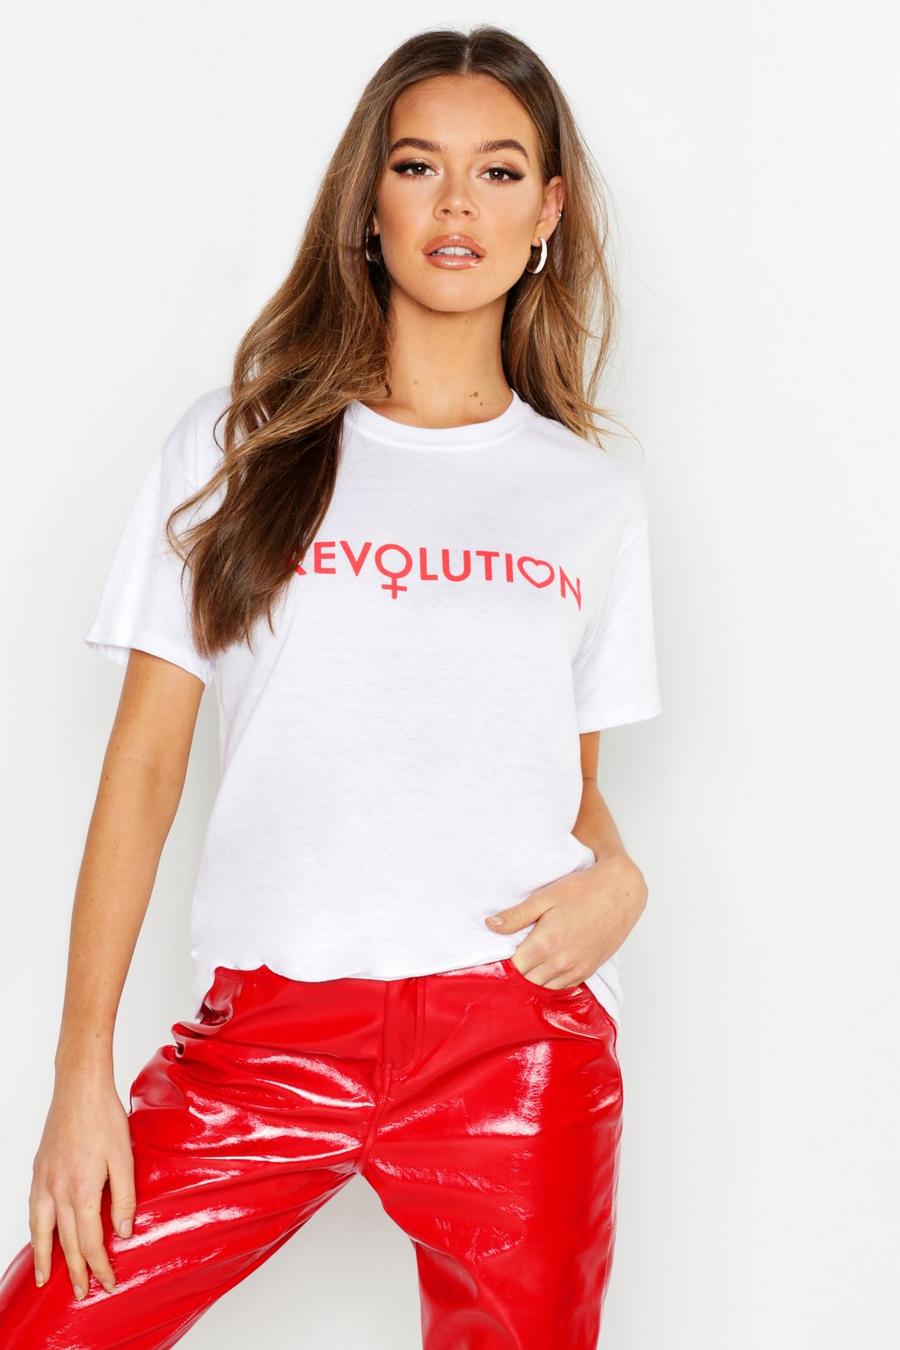 Revolution Graphic T-Shirt image number 1